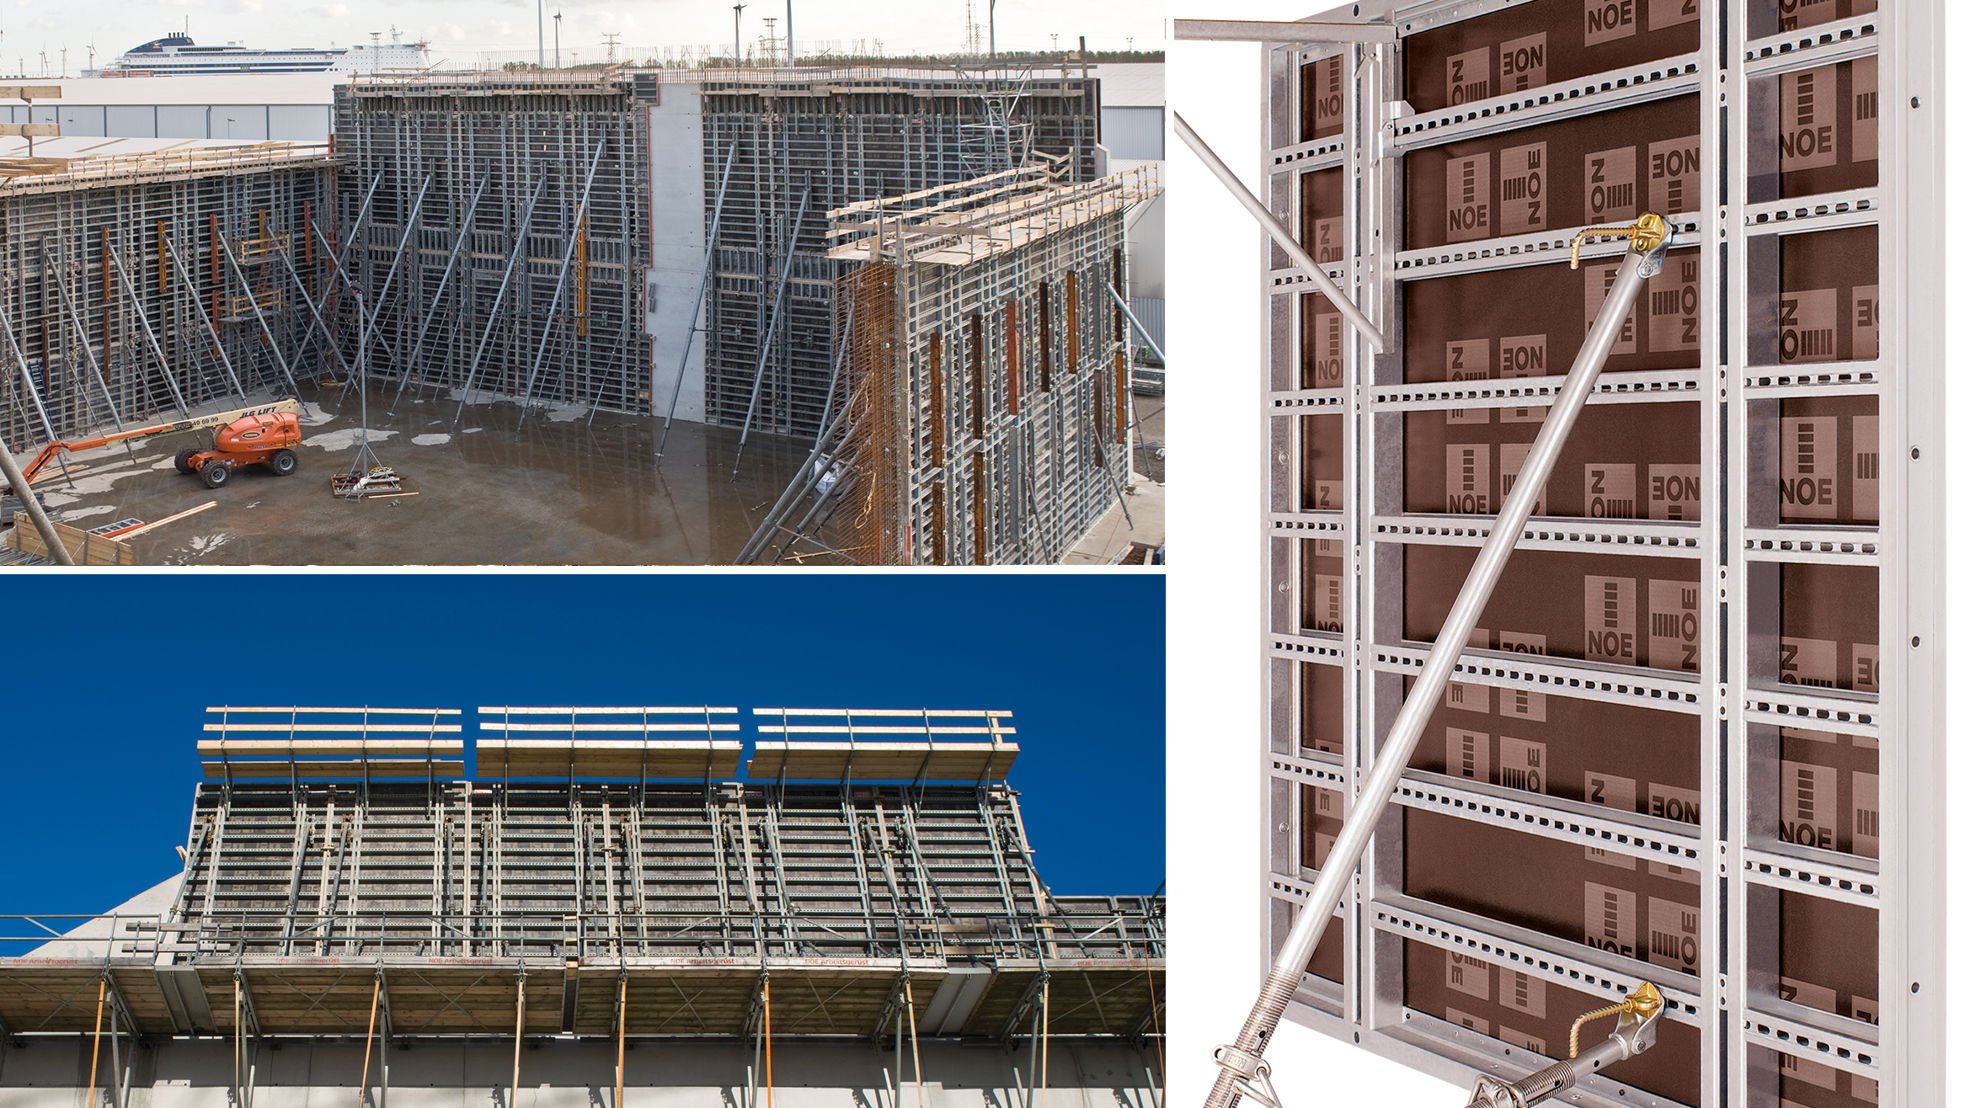 NOE-Schaltechnik uses birch plywood in its concrete formwork systems